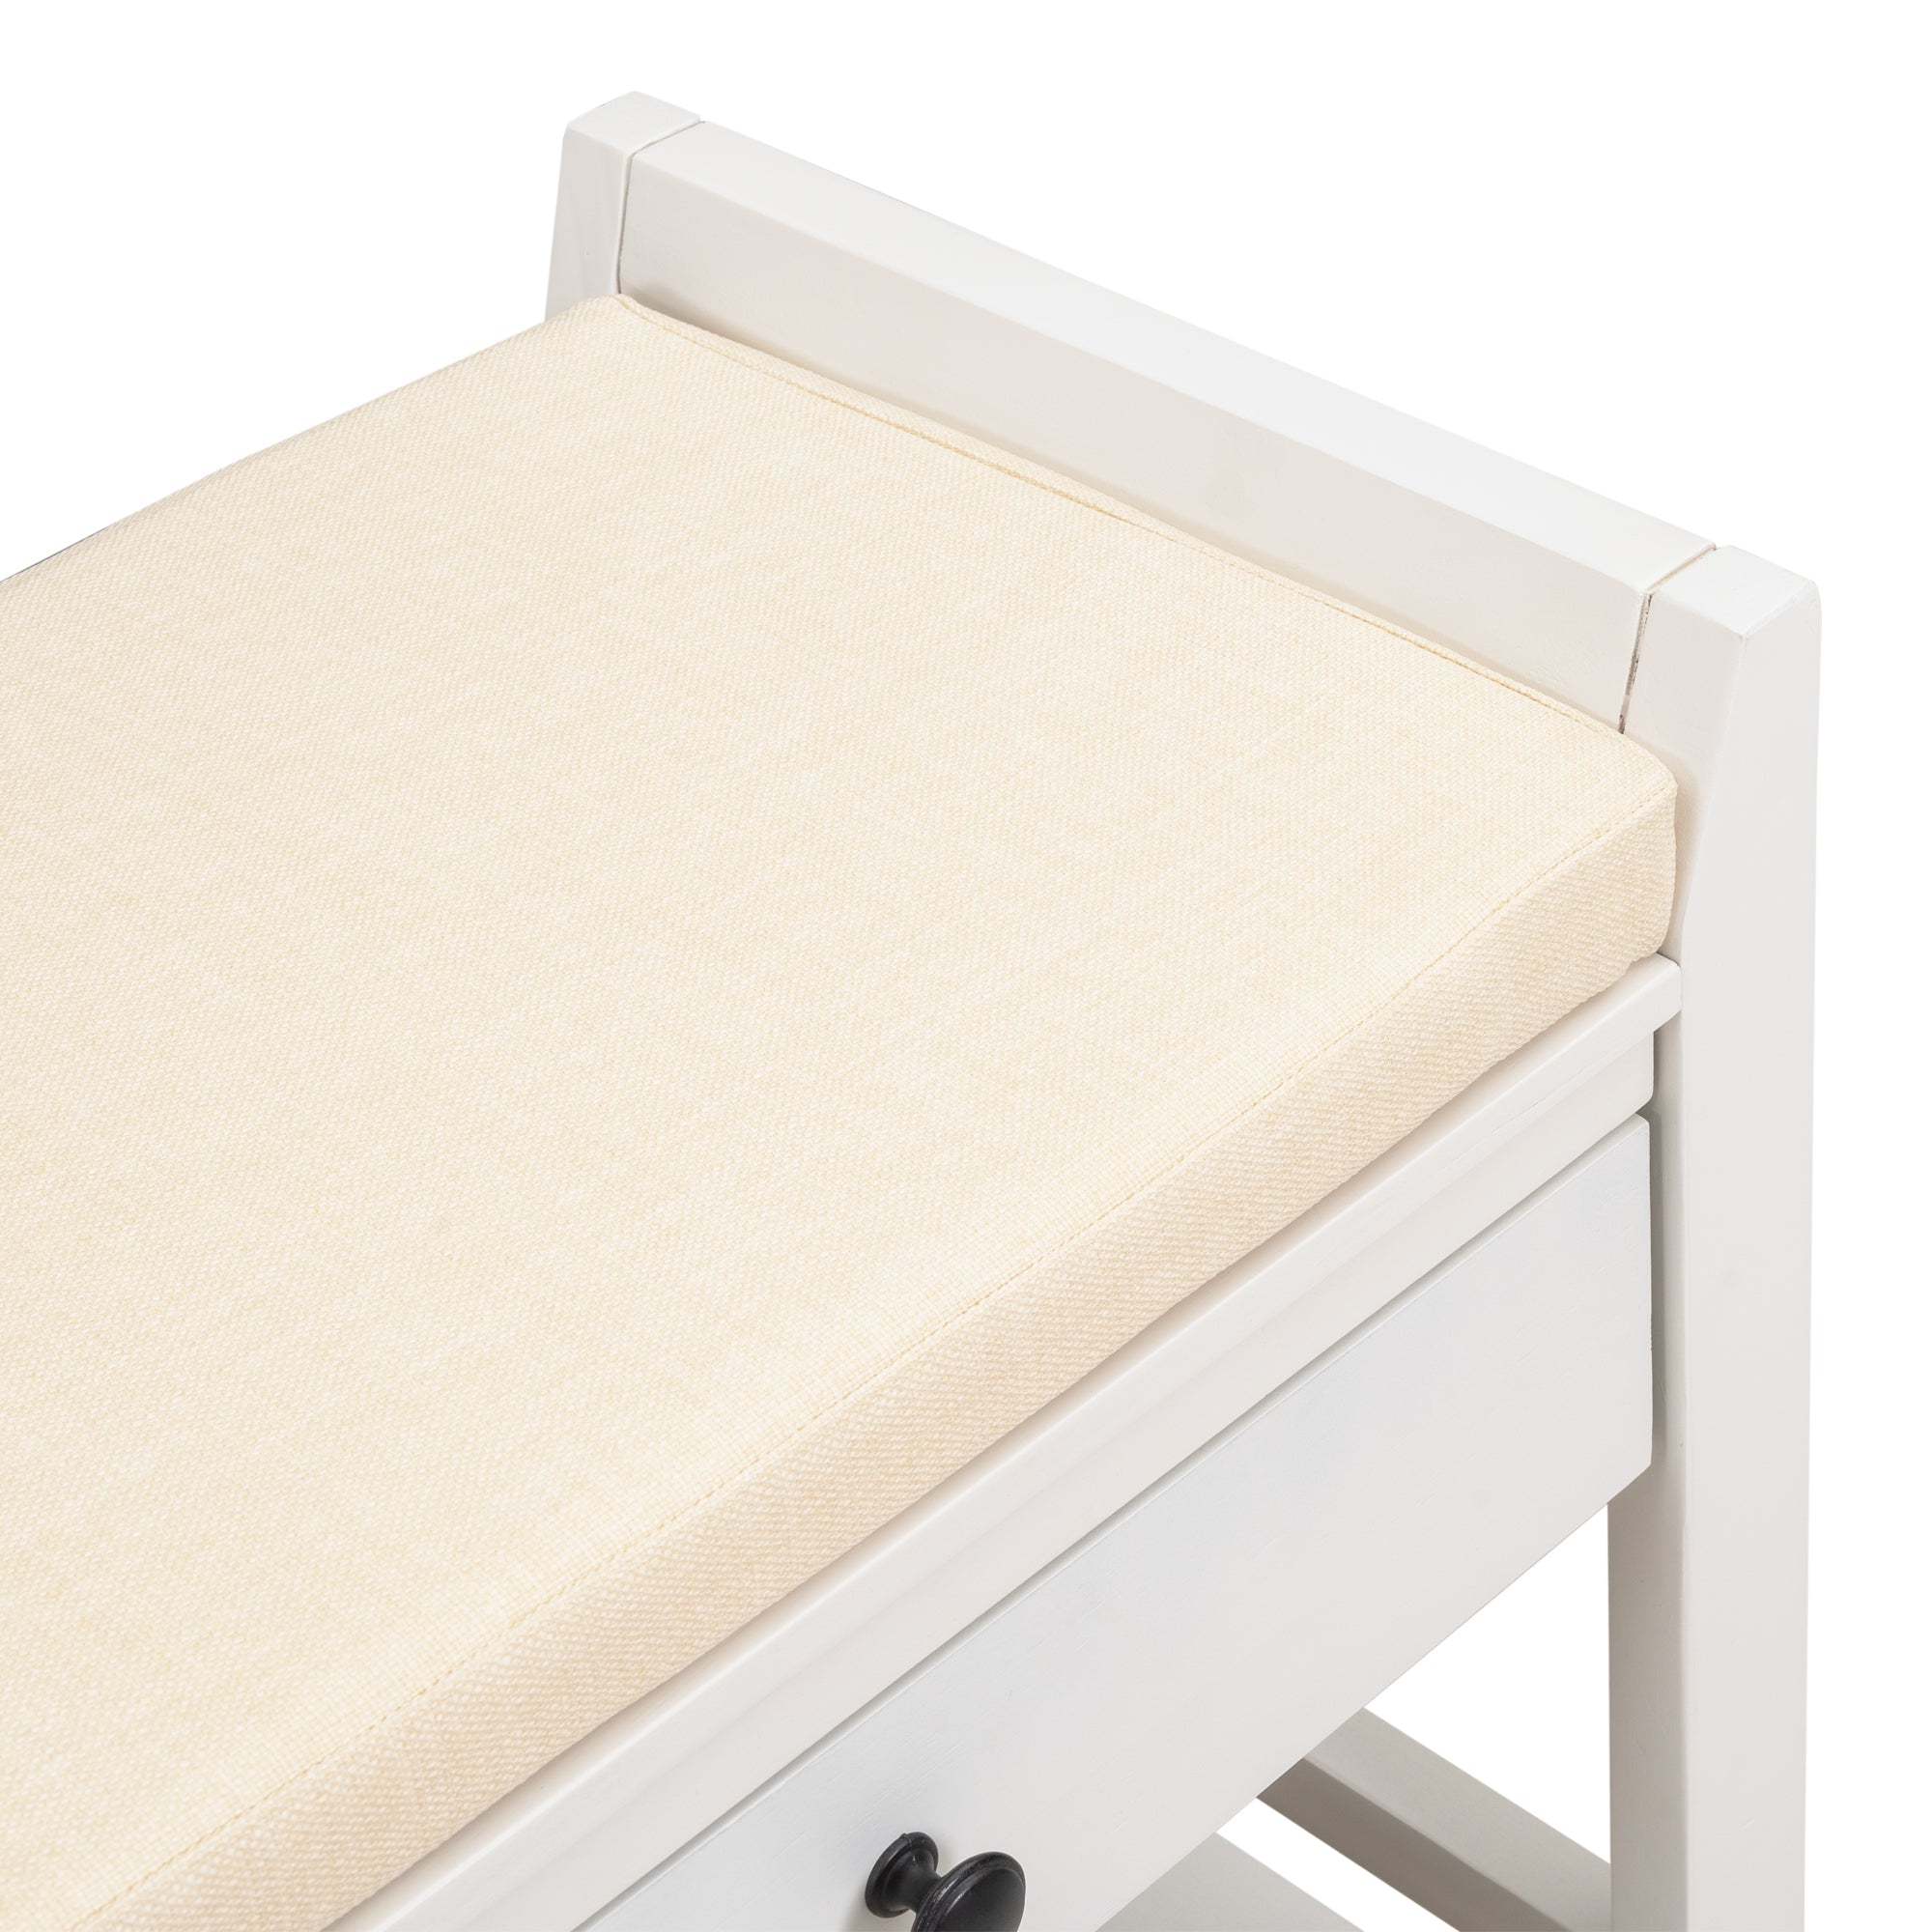 TREXM Upholstered Seat Storage Bench (White)